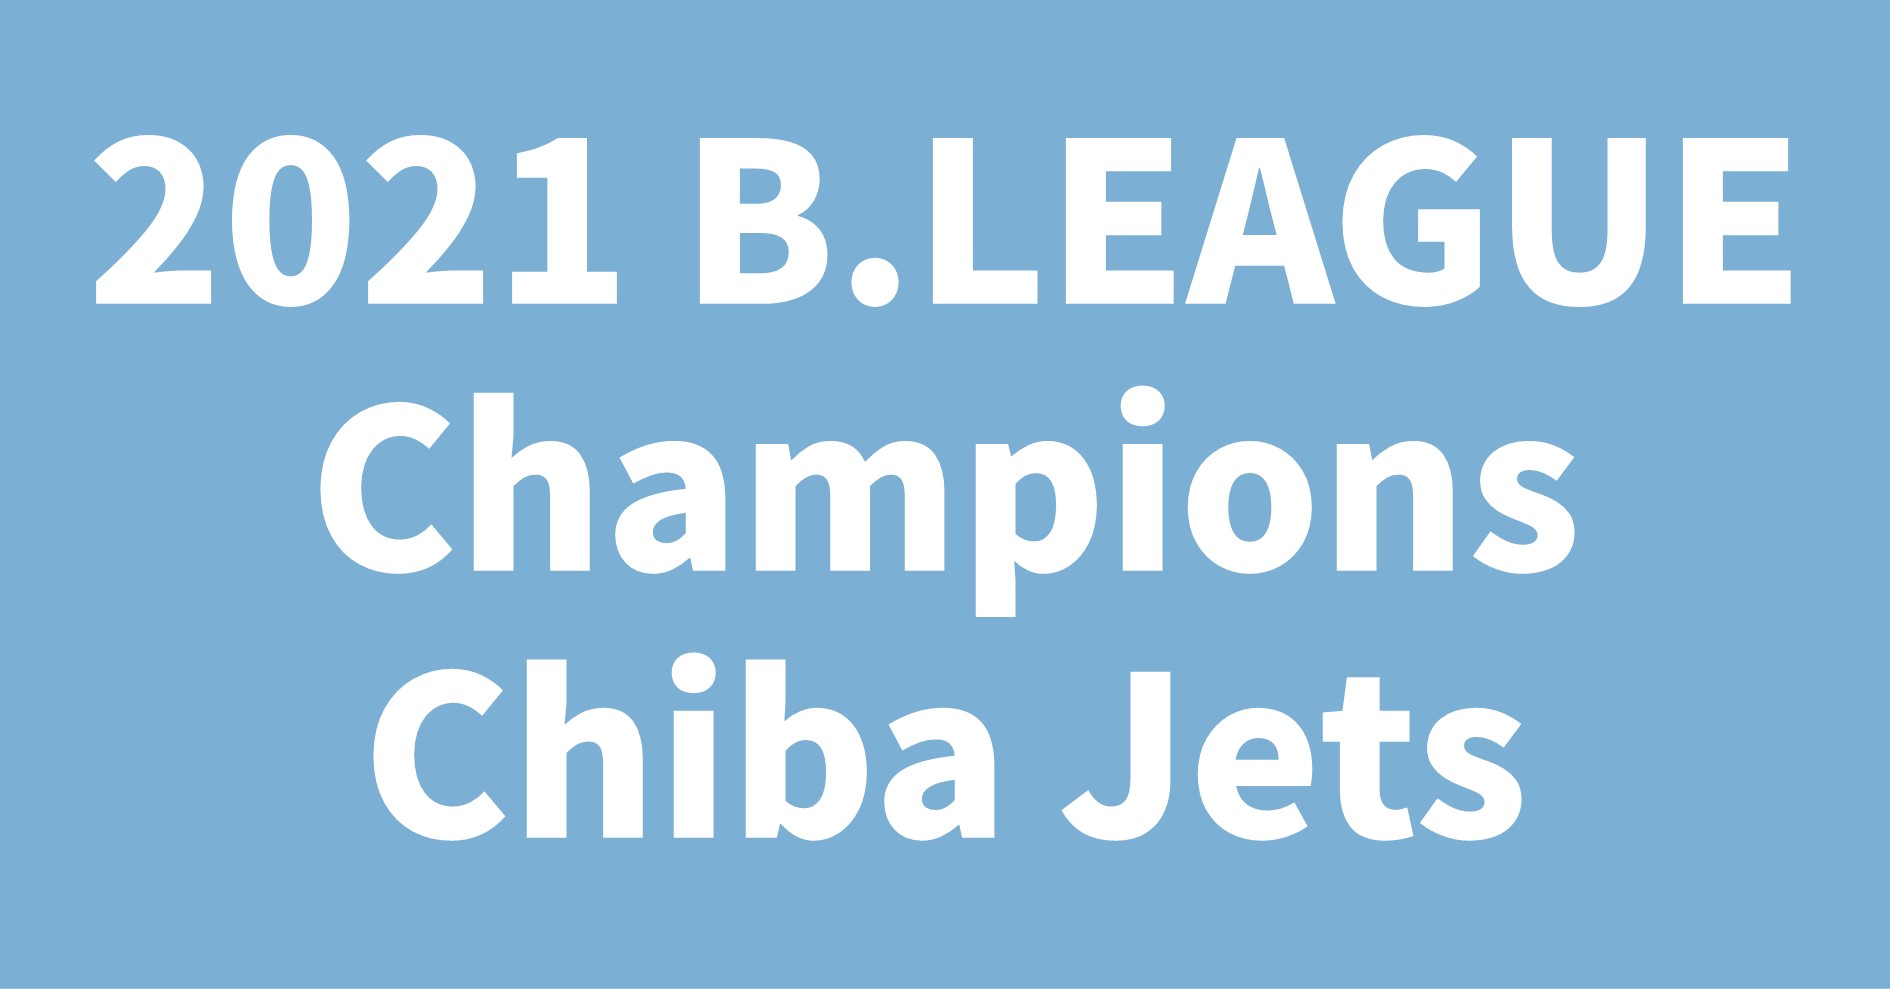 2021 B.LEAGUE Champions Chiba Jets